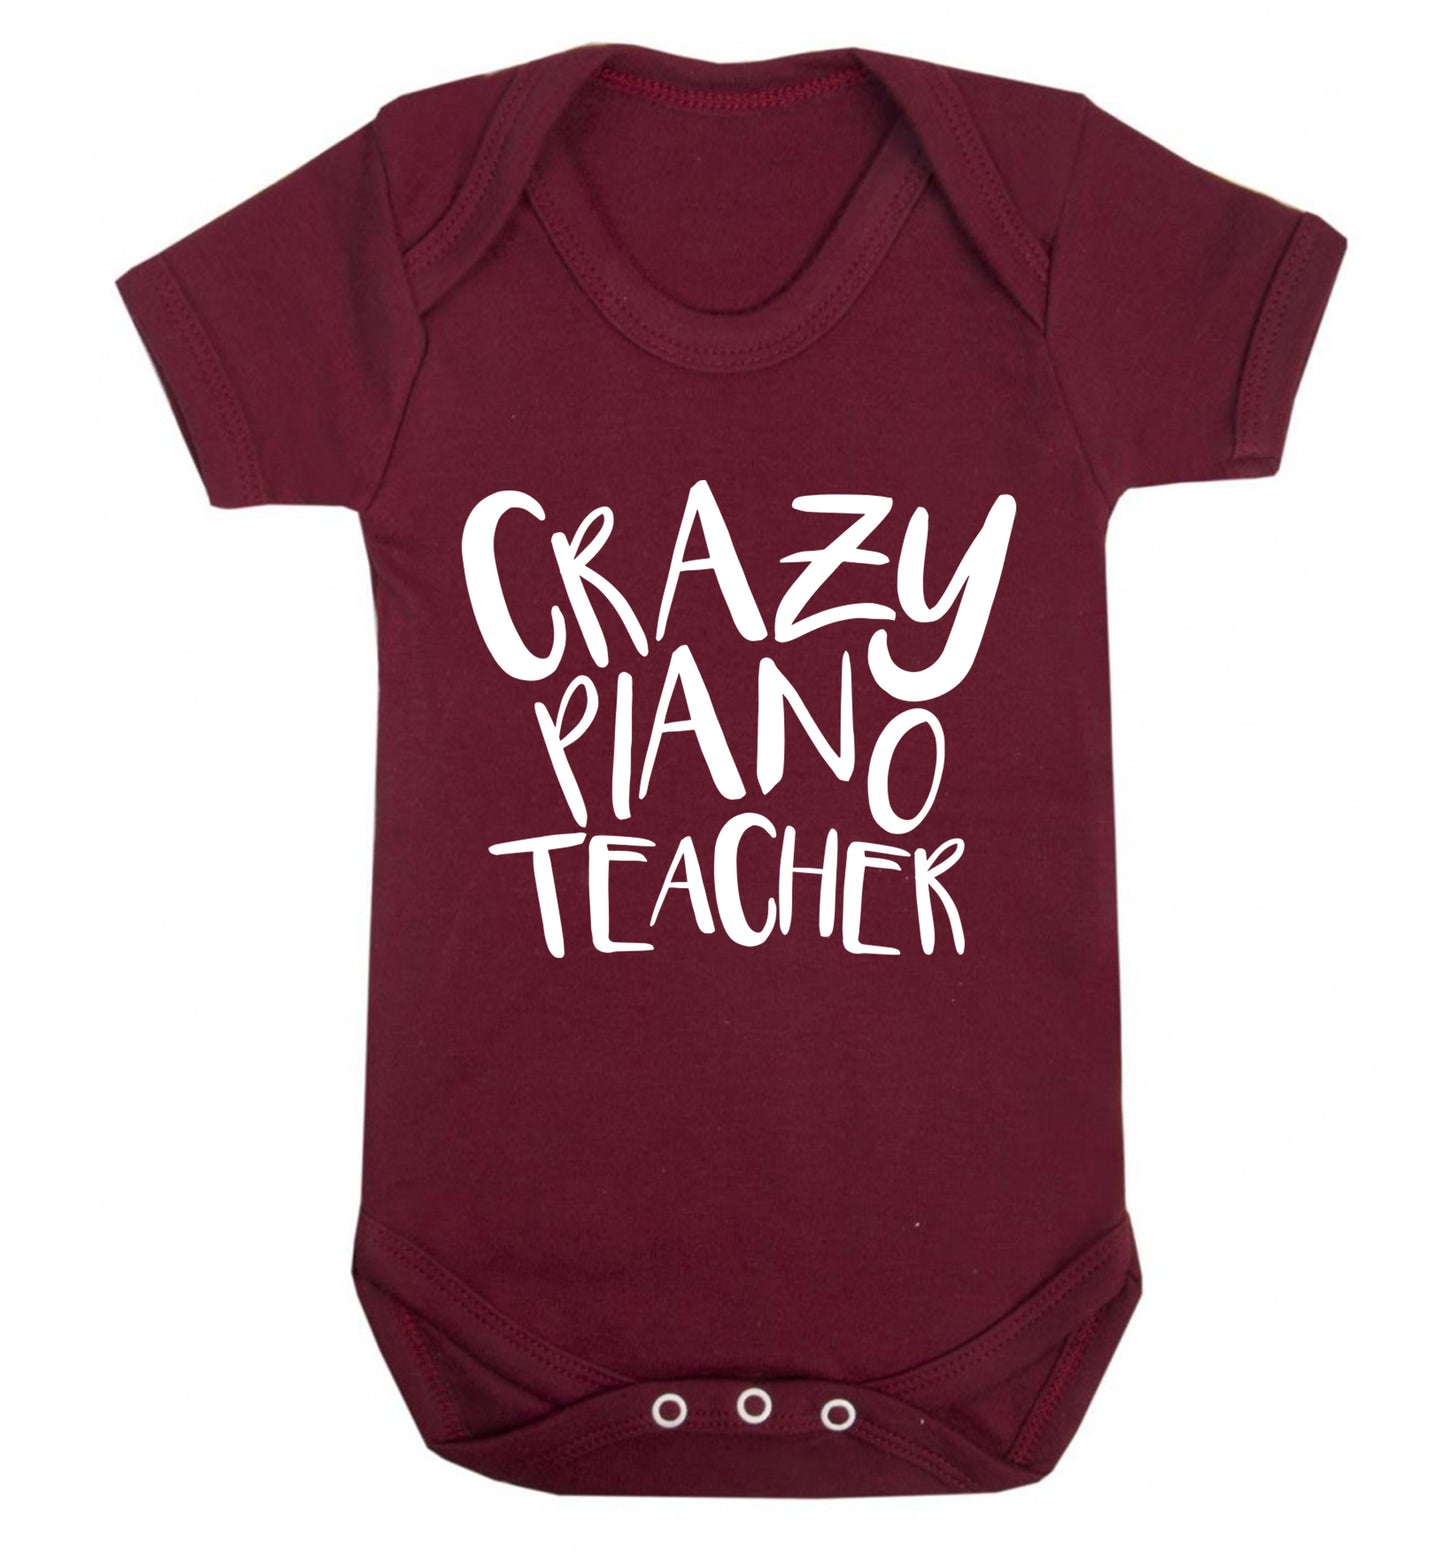 Crazy piano teacher Baby Vest maroon 18-24 months